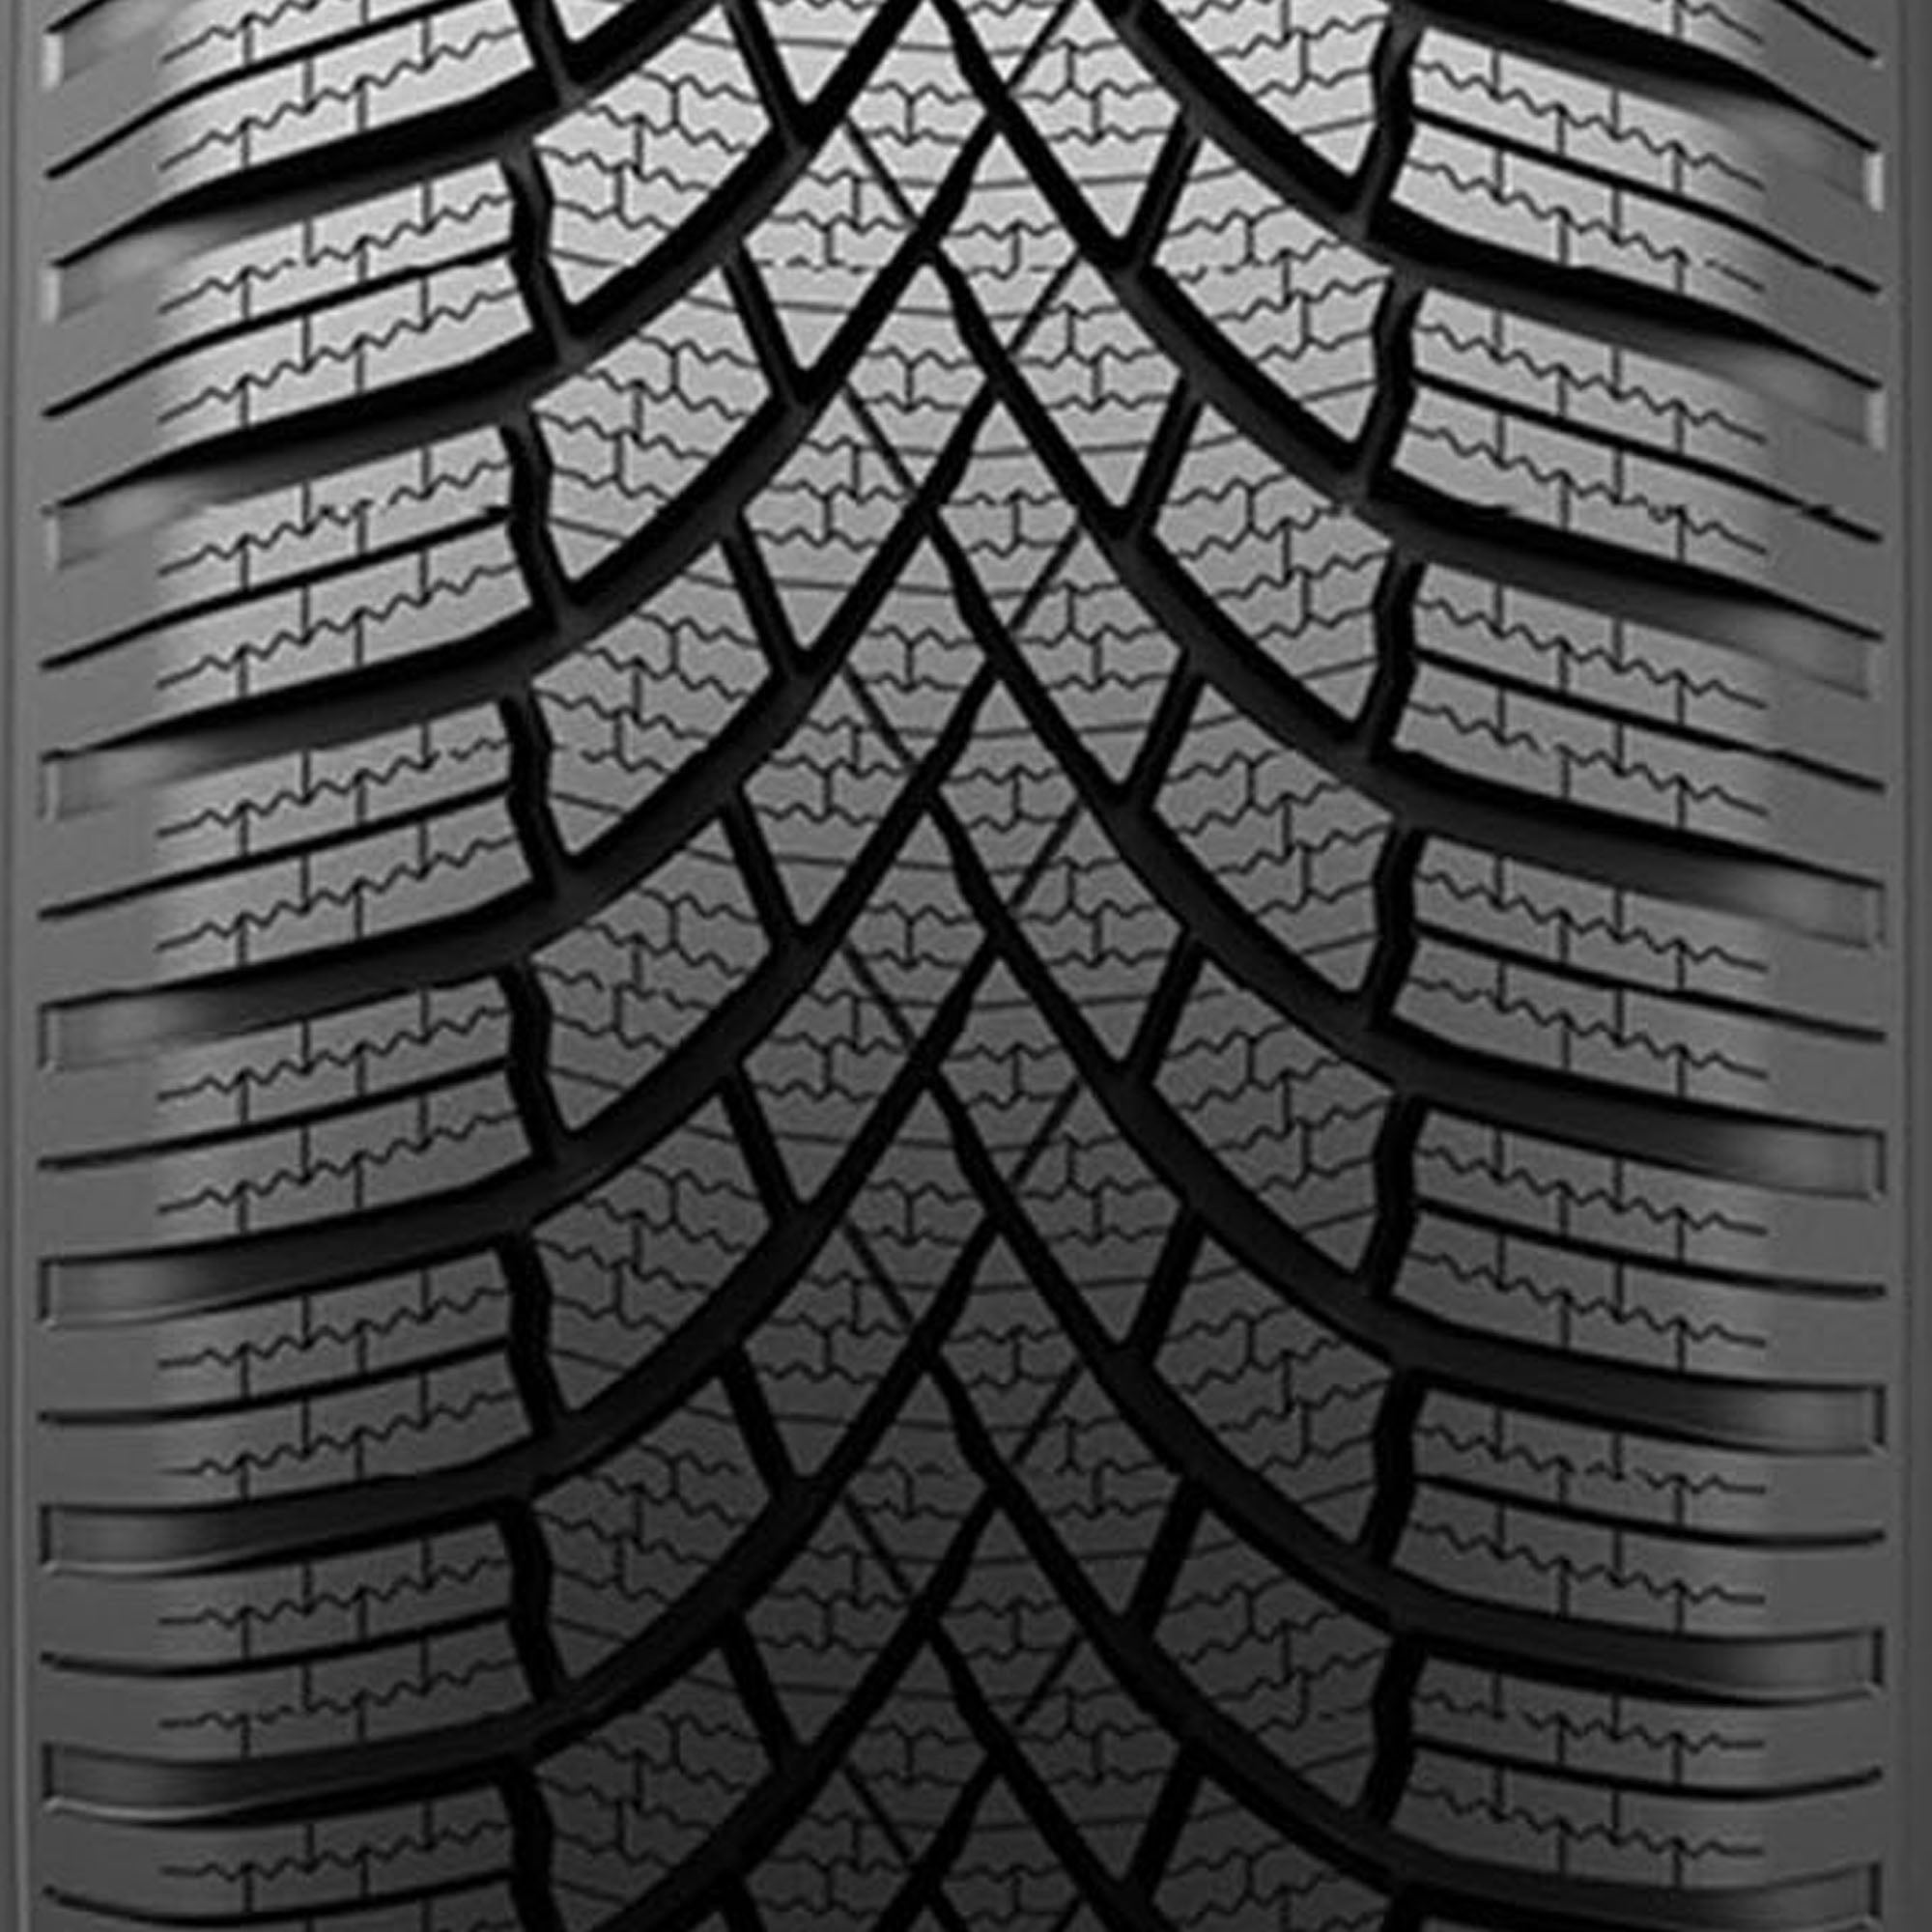 Tire 2005 Blizzak Winter Base 255/40R18 Mercedes-Benz LM005 SL500 Fits: XL SL550 2011- Passenger 99V 14 Bridgestone Base, Mercedes-Benz